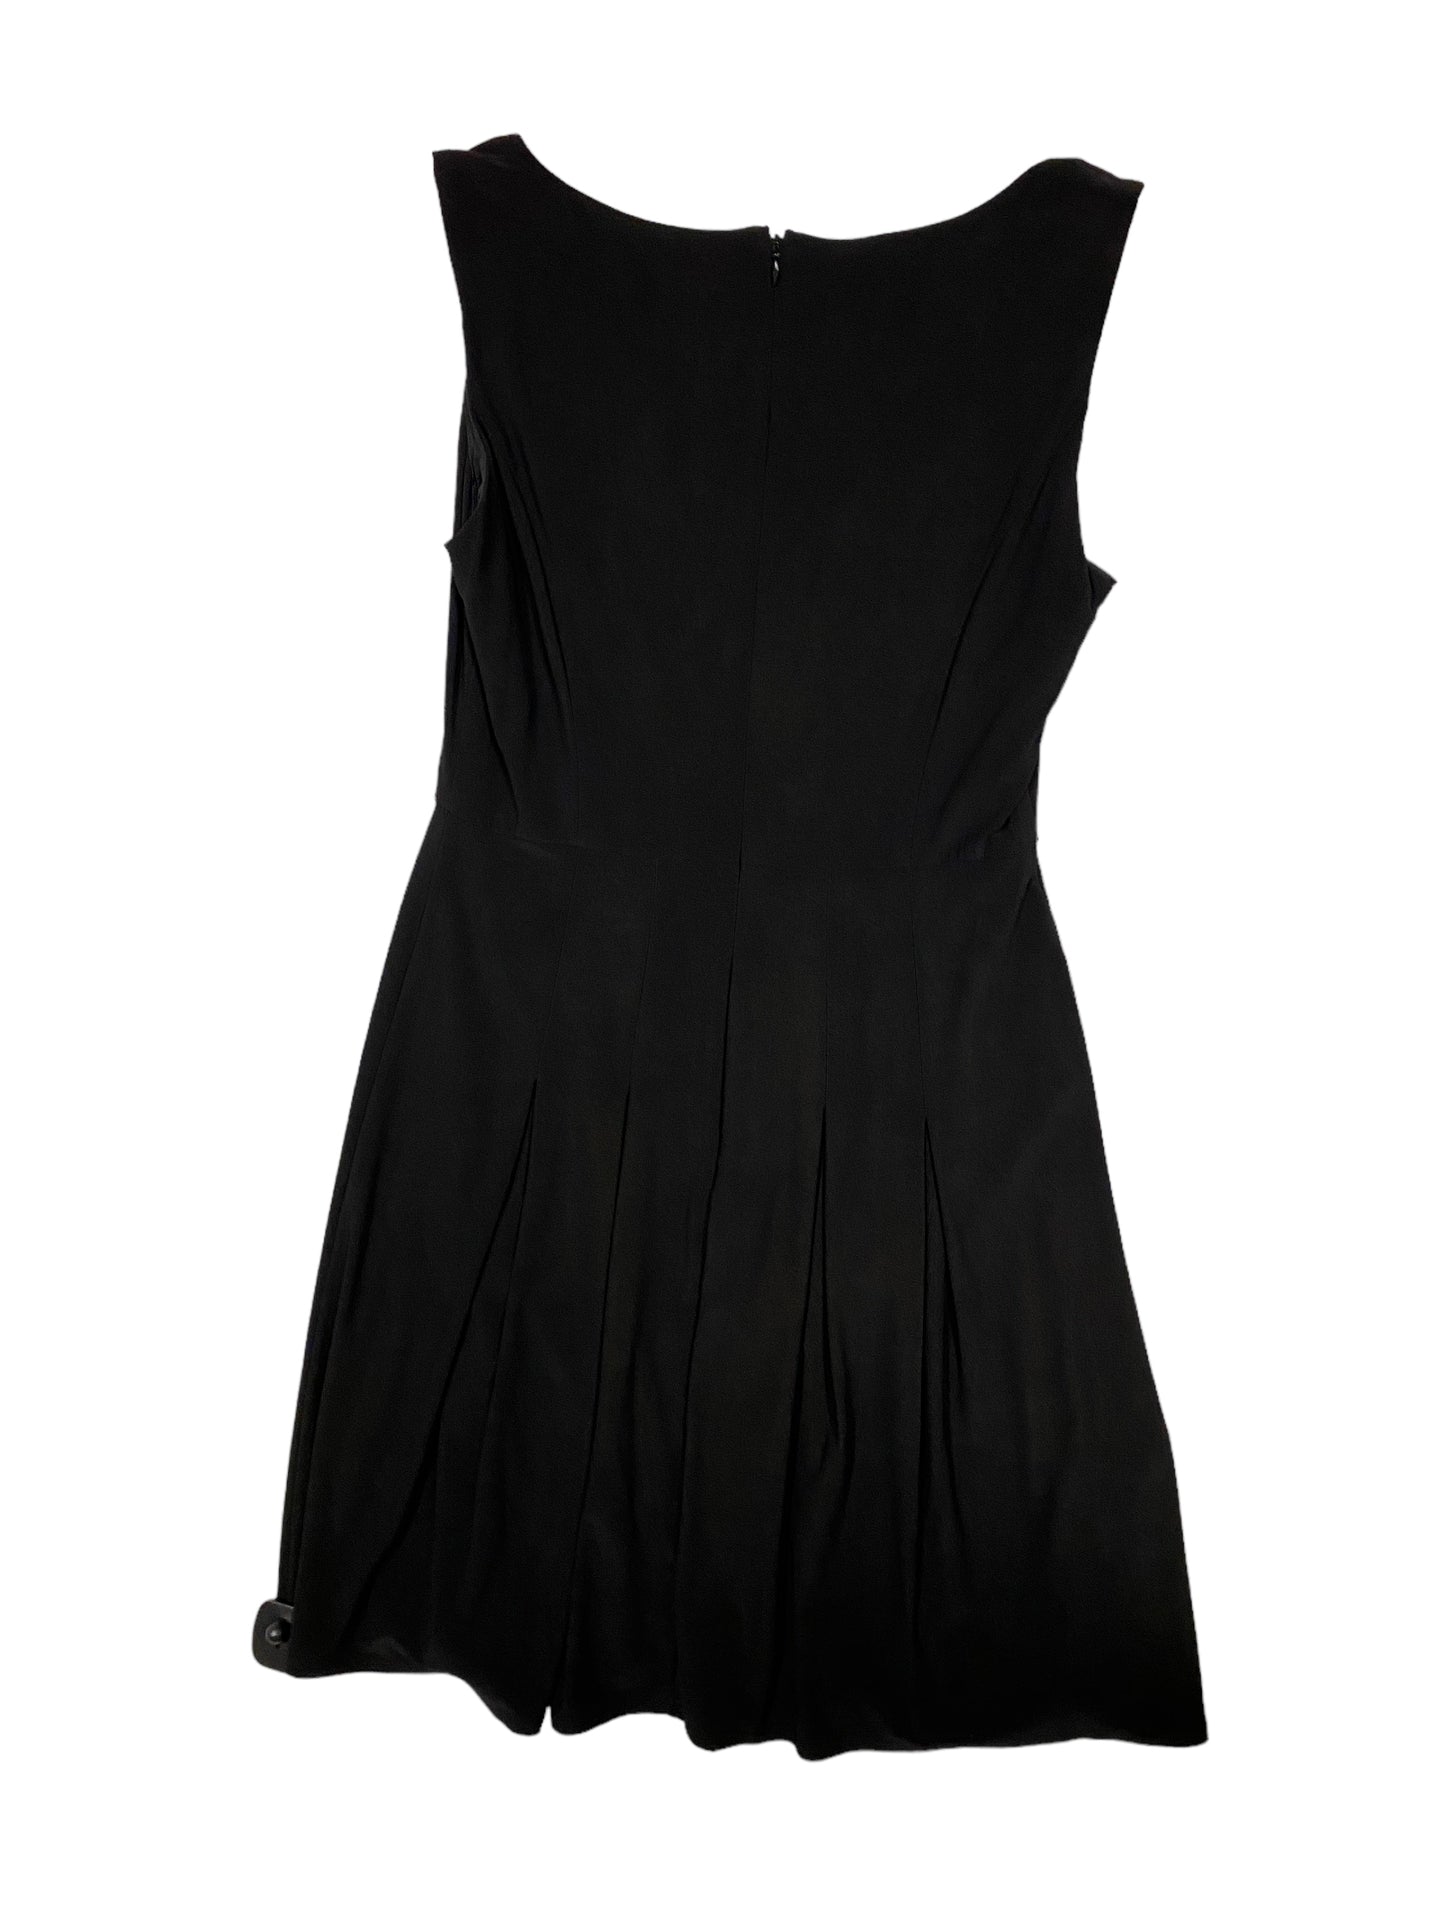 Black Dress Casual Midi Jones New York, Size 6